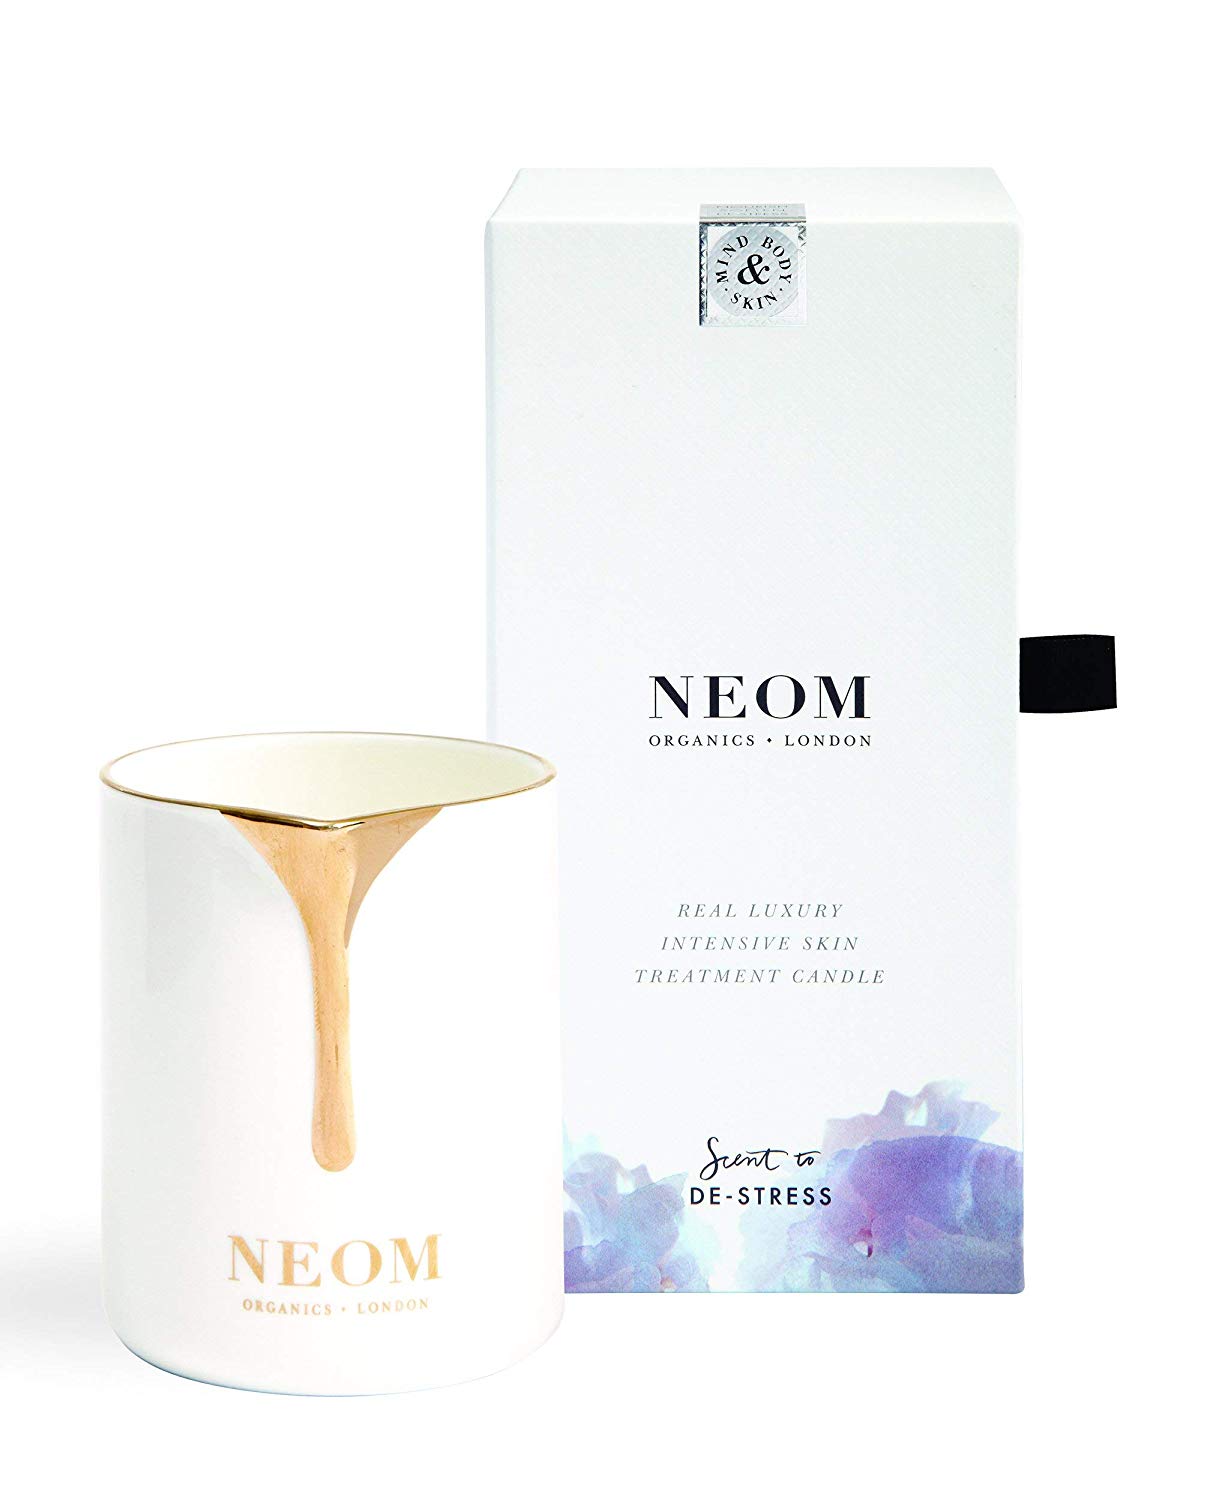 Neom Organics London Real Luxury Intensive Skin